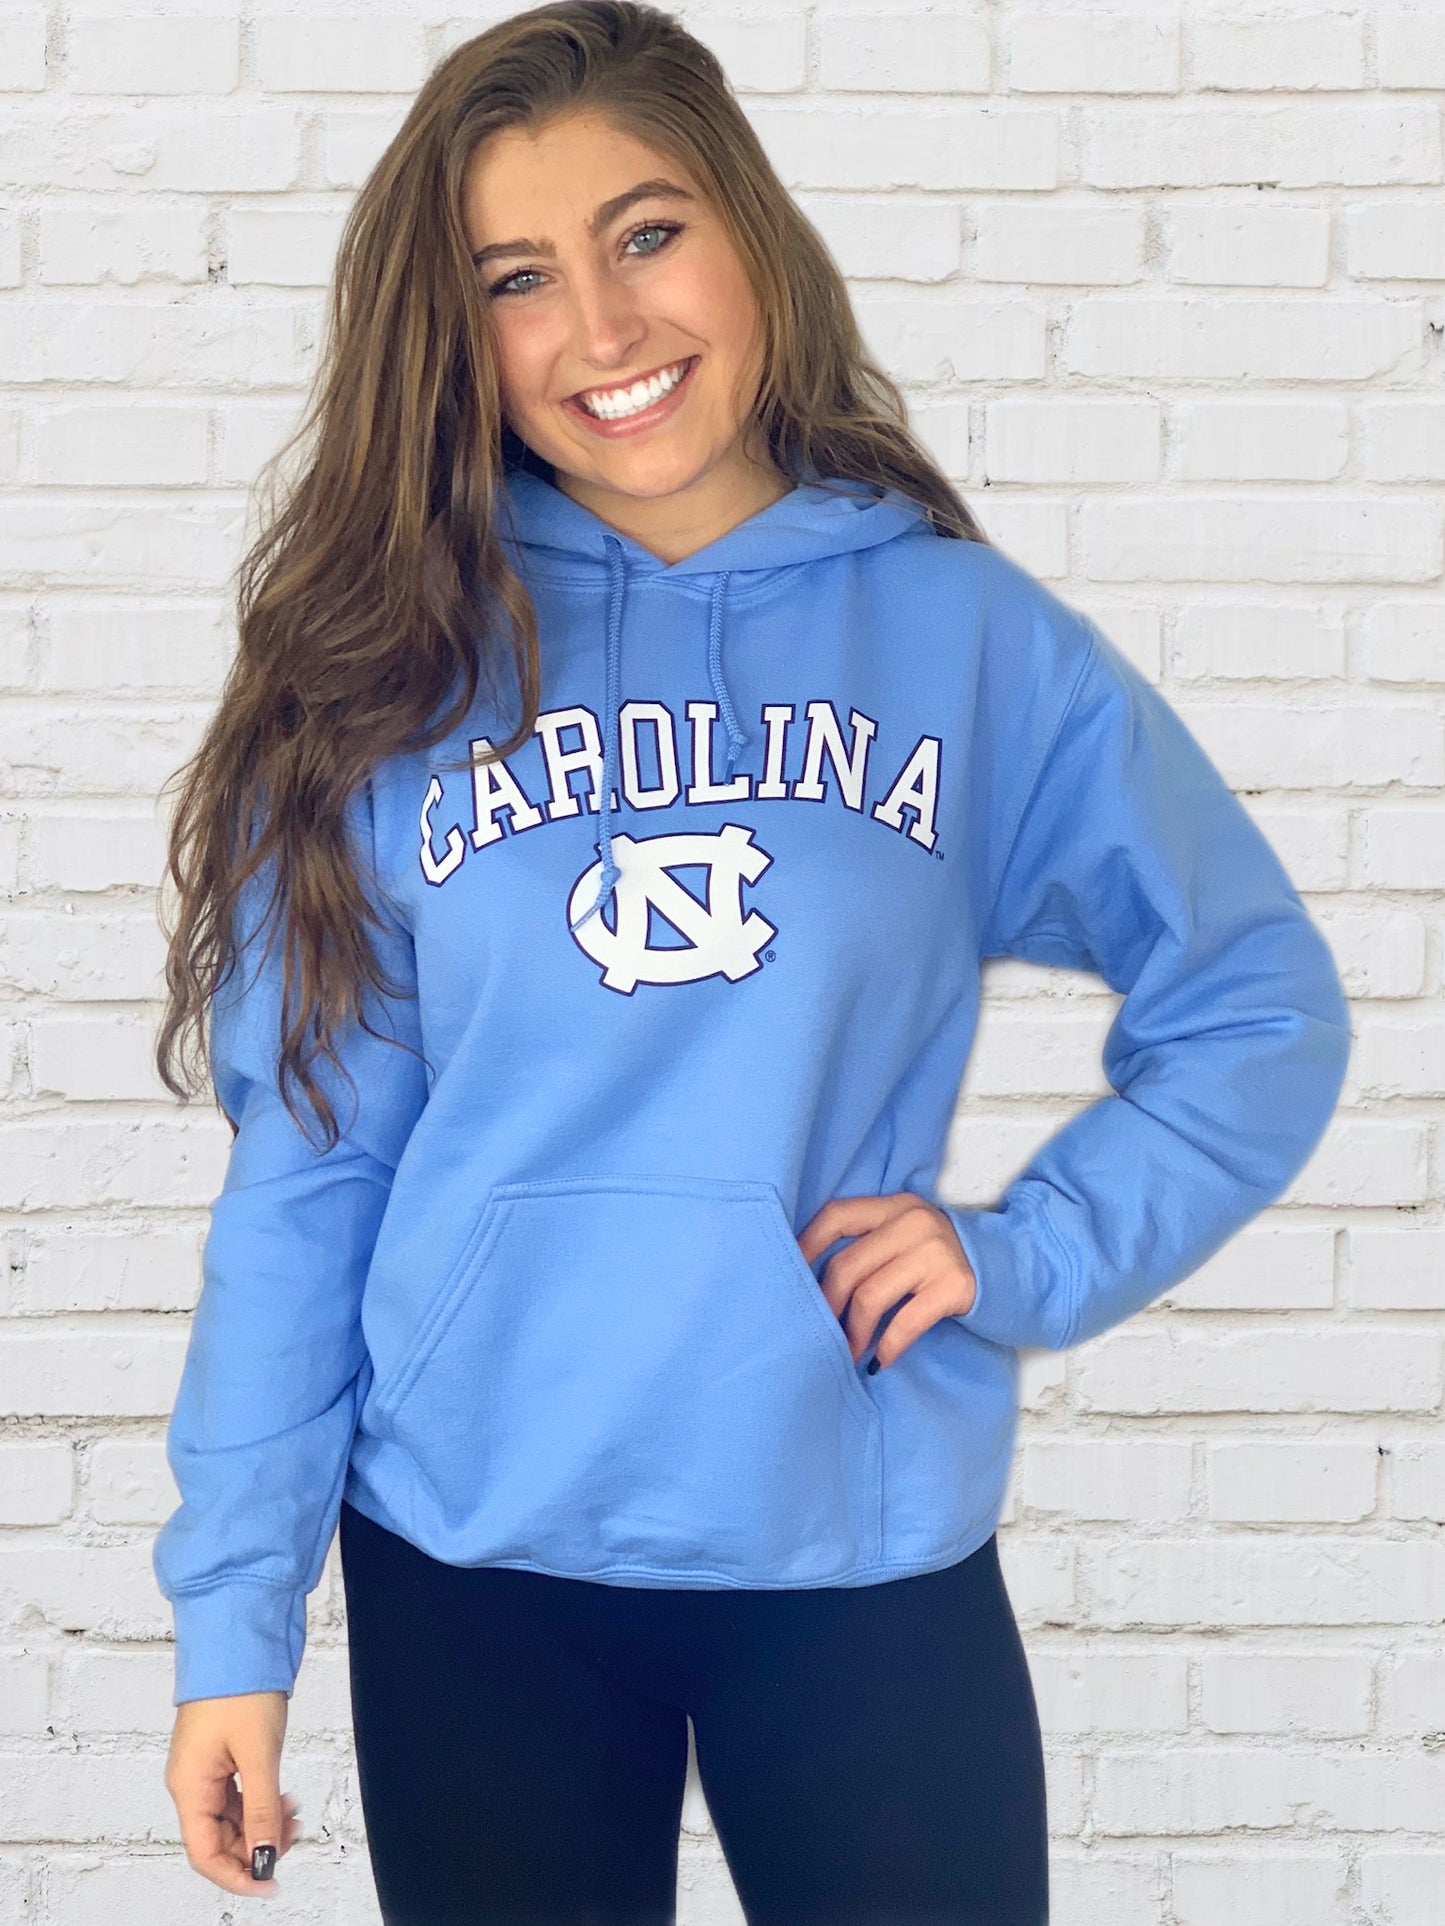 Carolina Blue Basic UNC Hoodie Sweatshirt by Champion